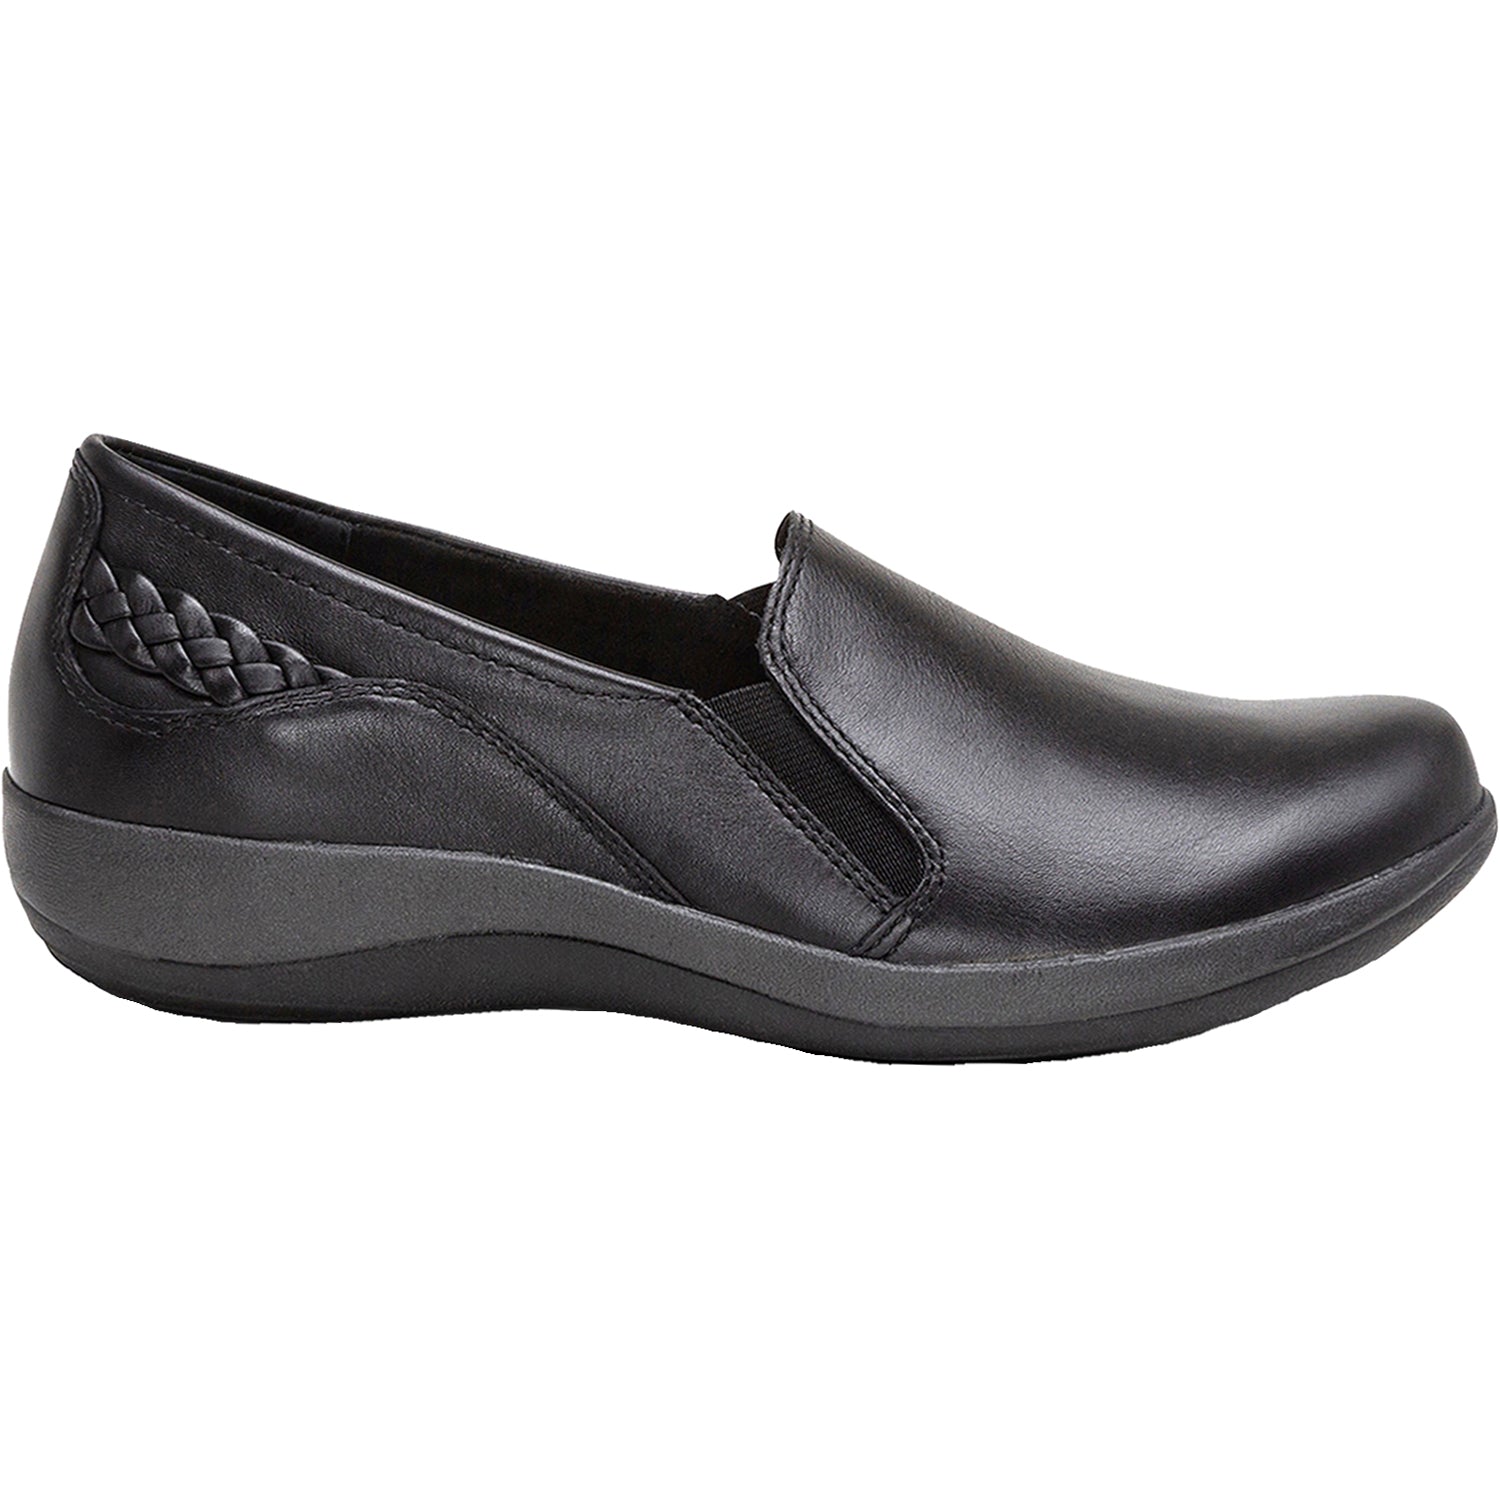 Aetrex Trisha | Women's Slip-On Shoes | Footwear etc.